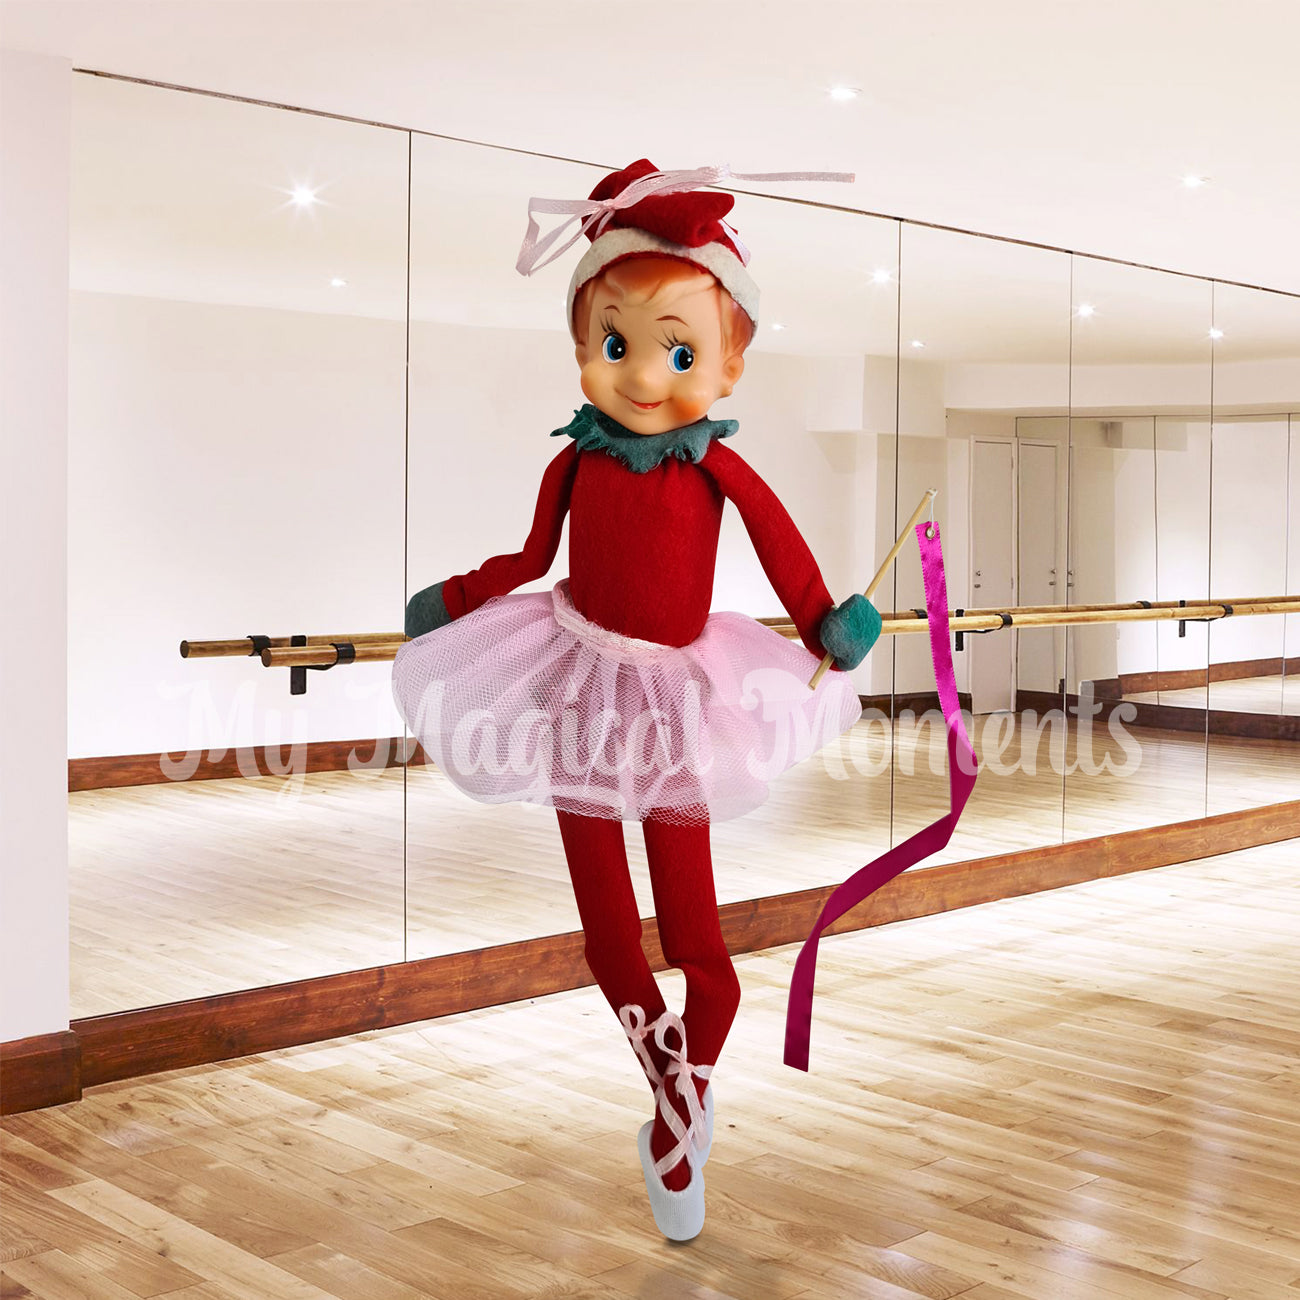 Elf wearing a tutu doing ballet holding a ribbon